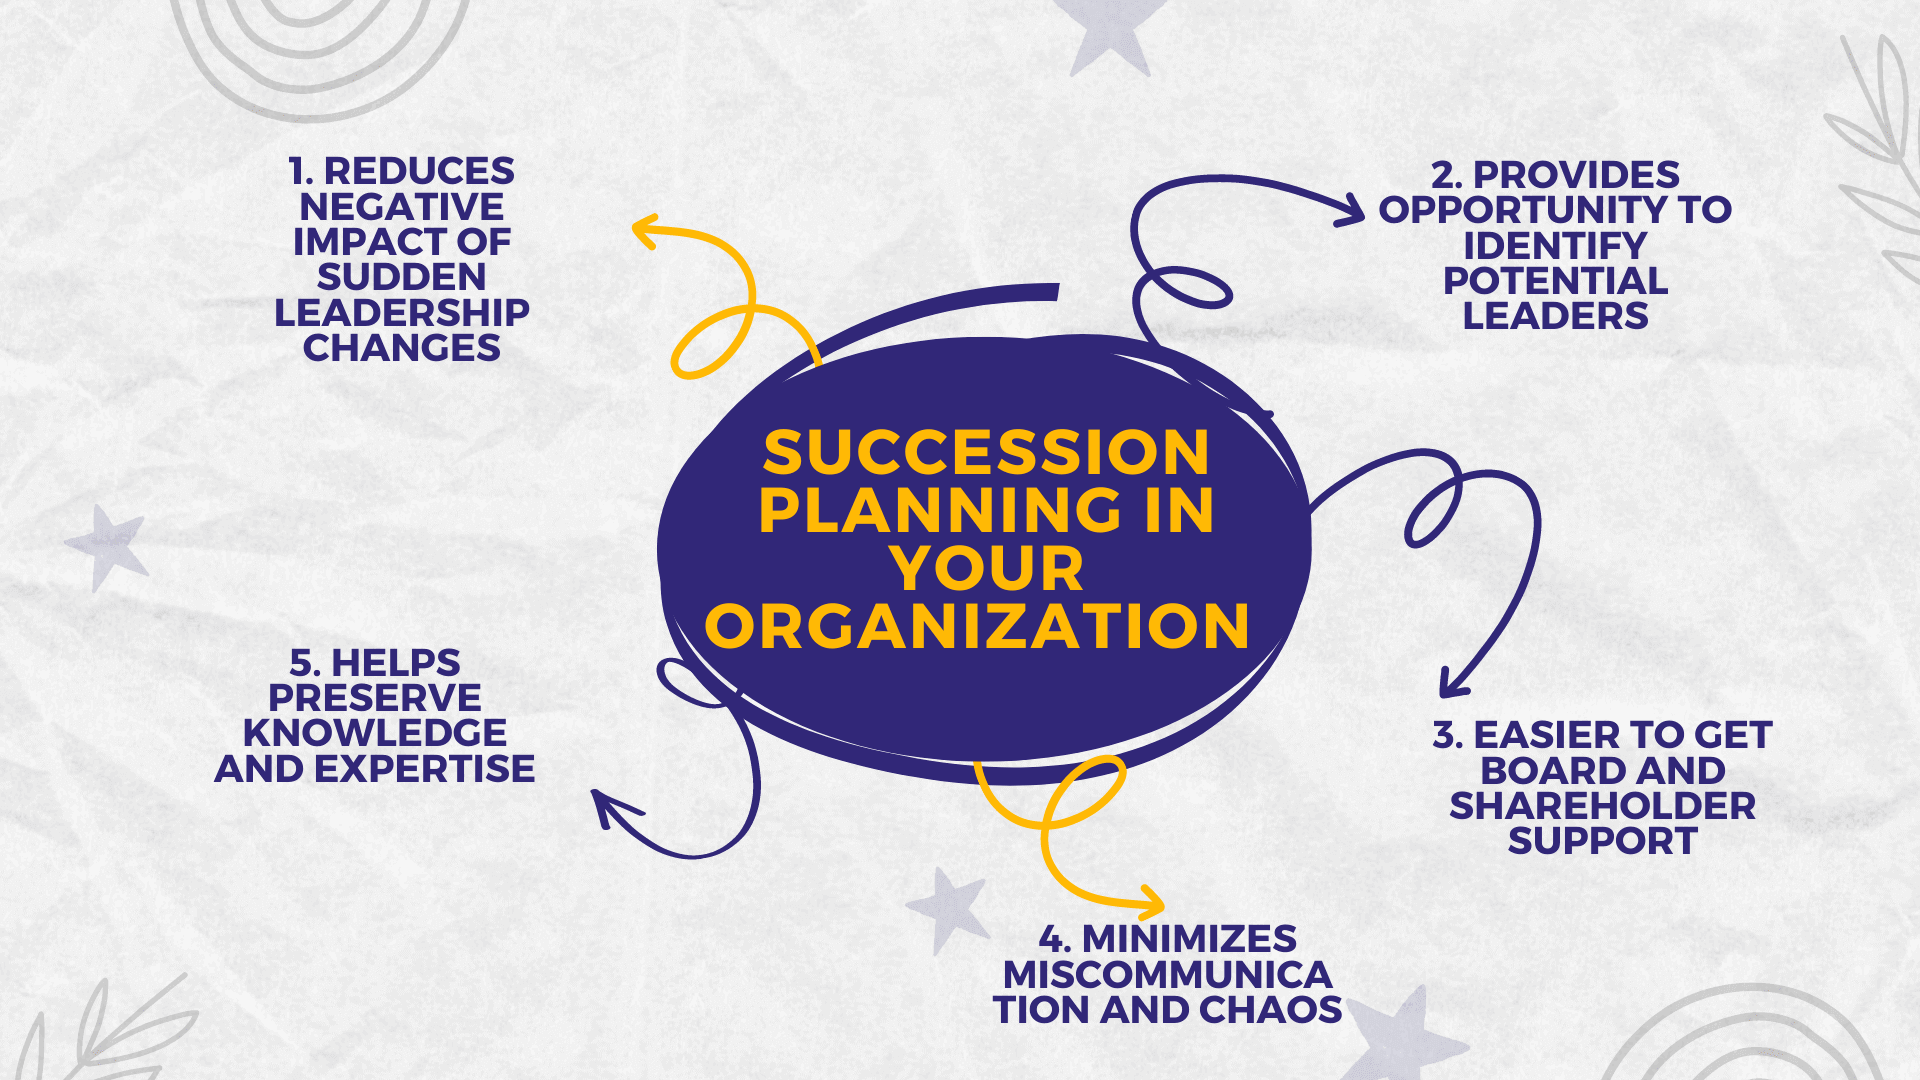 Benefits of succession planning